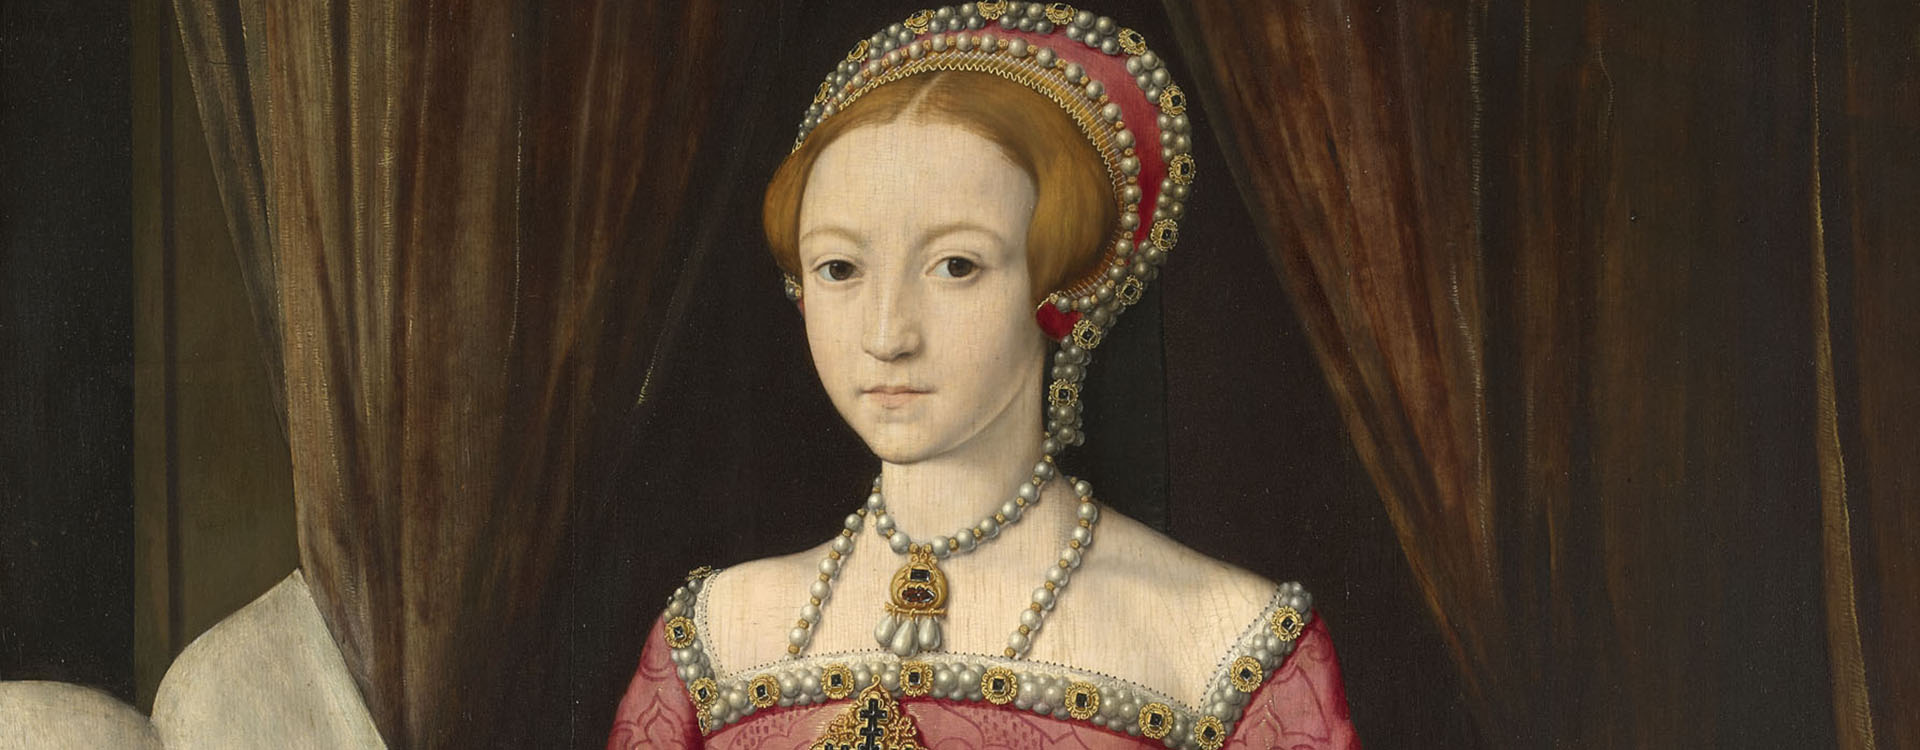 Elizabeth I when a Princess